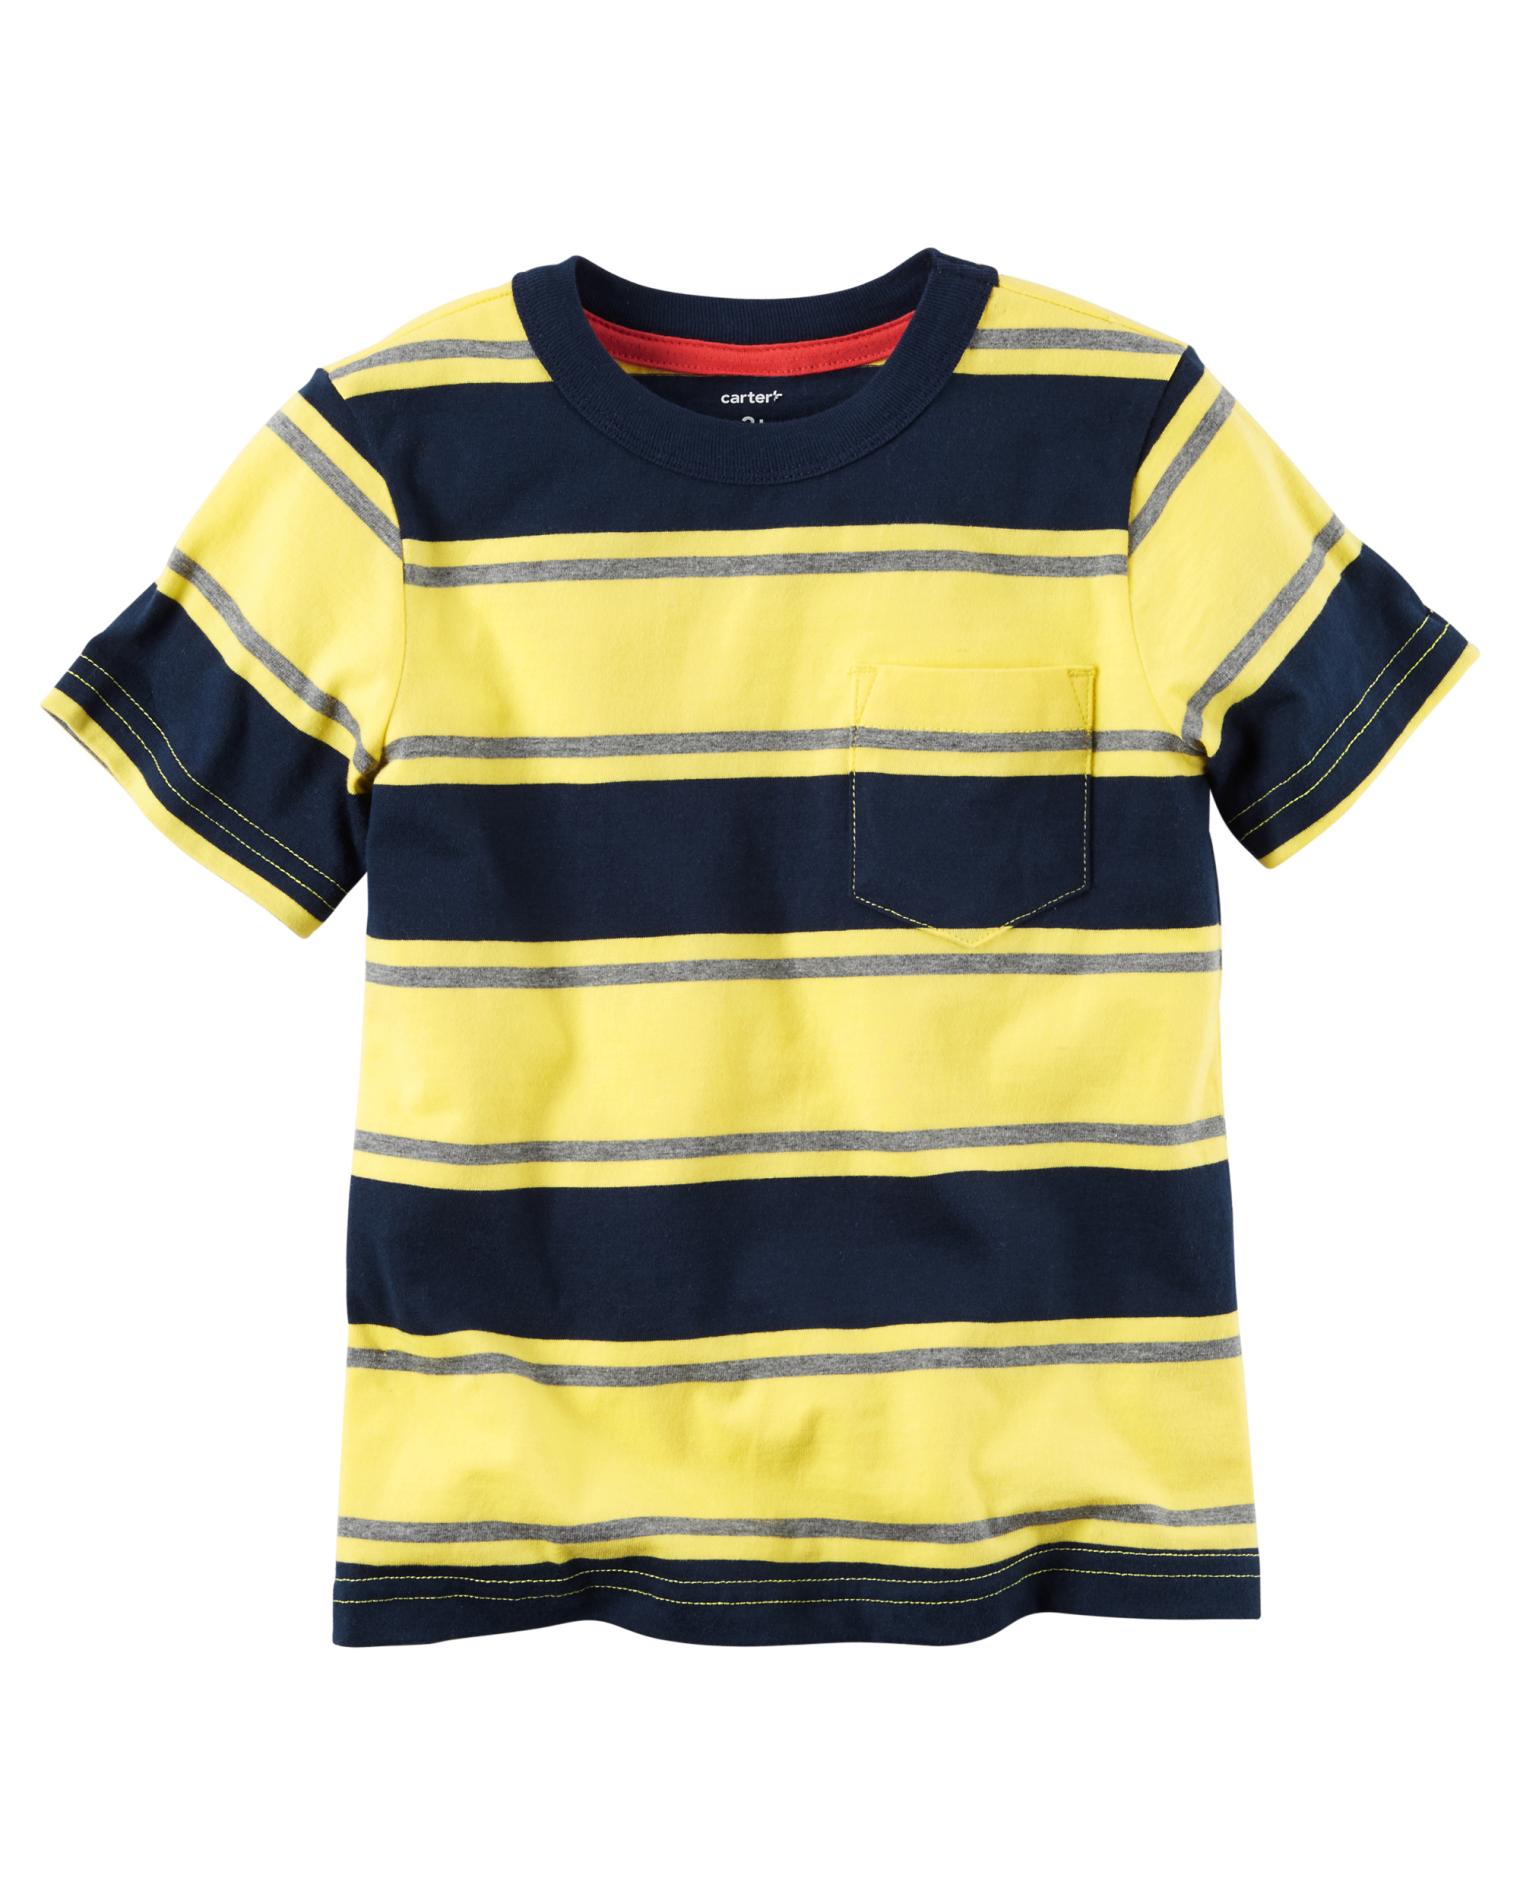 Carter's Toddler Boys' Pocket T-Shirt - Striped